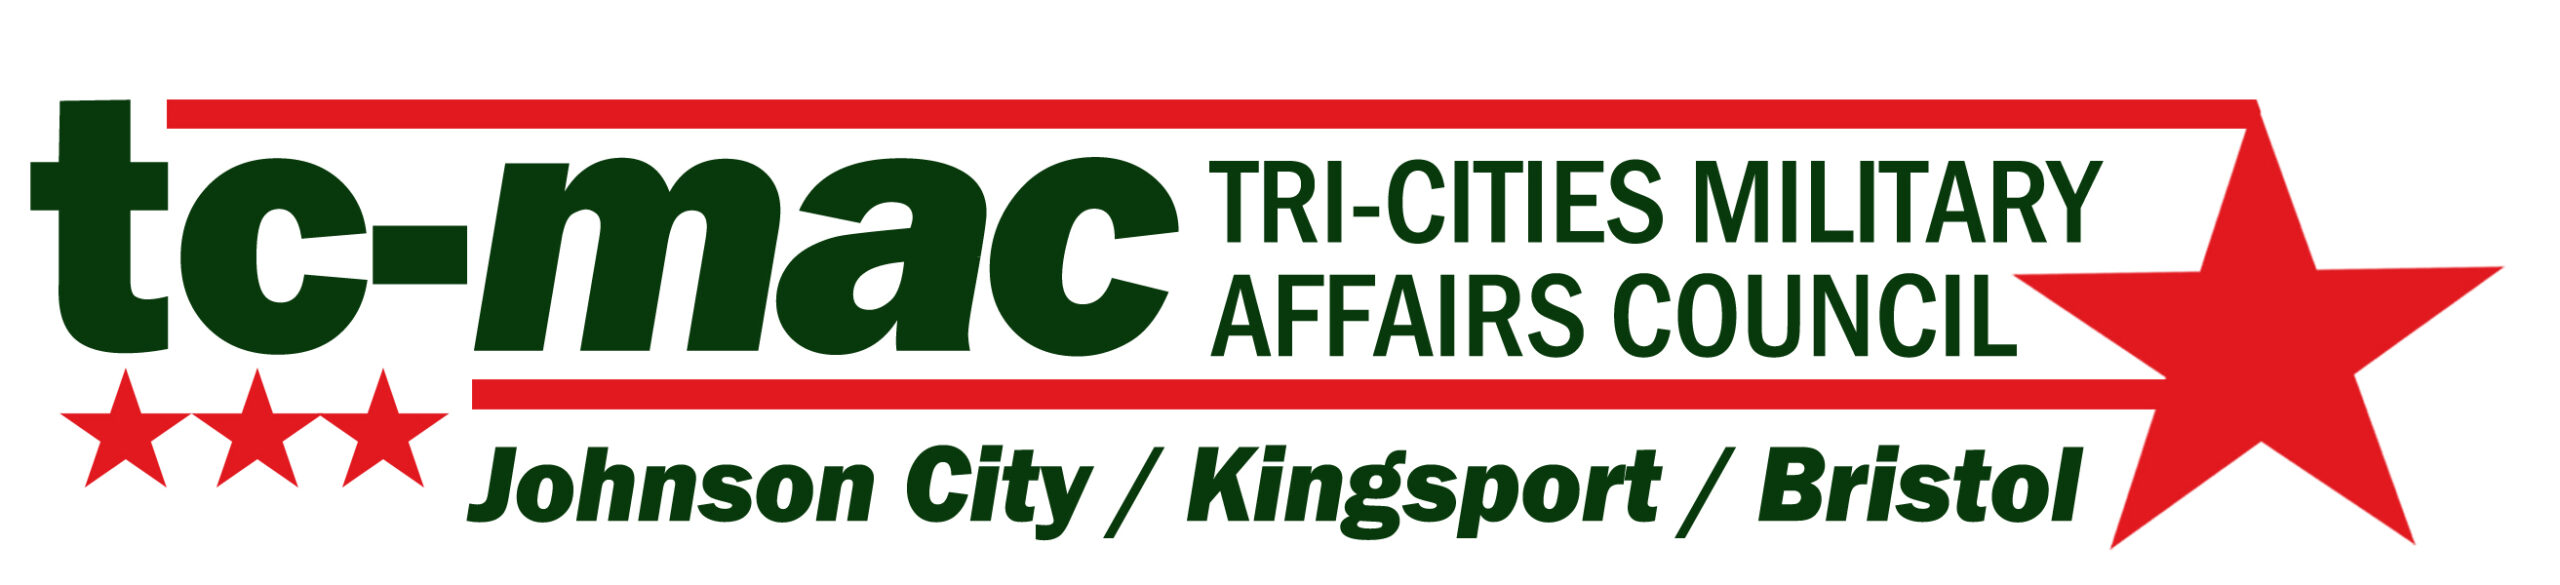 Tri-Cities Military Affairs Council